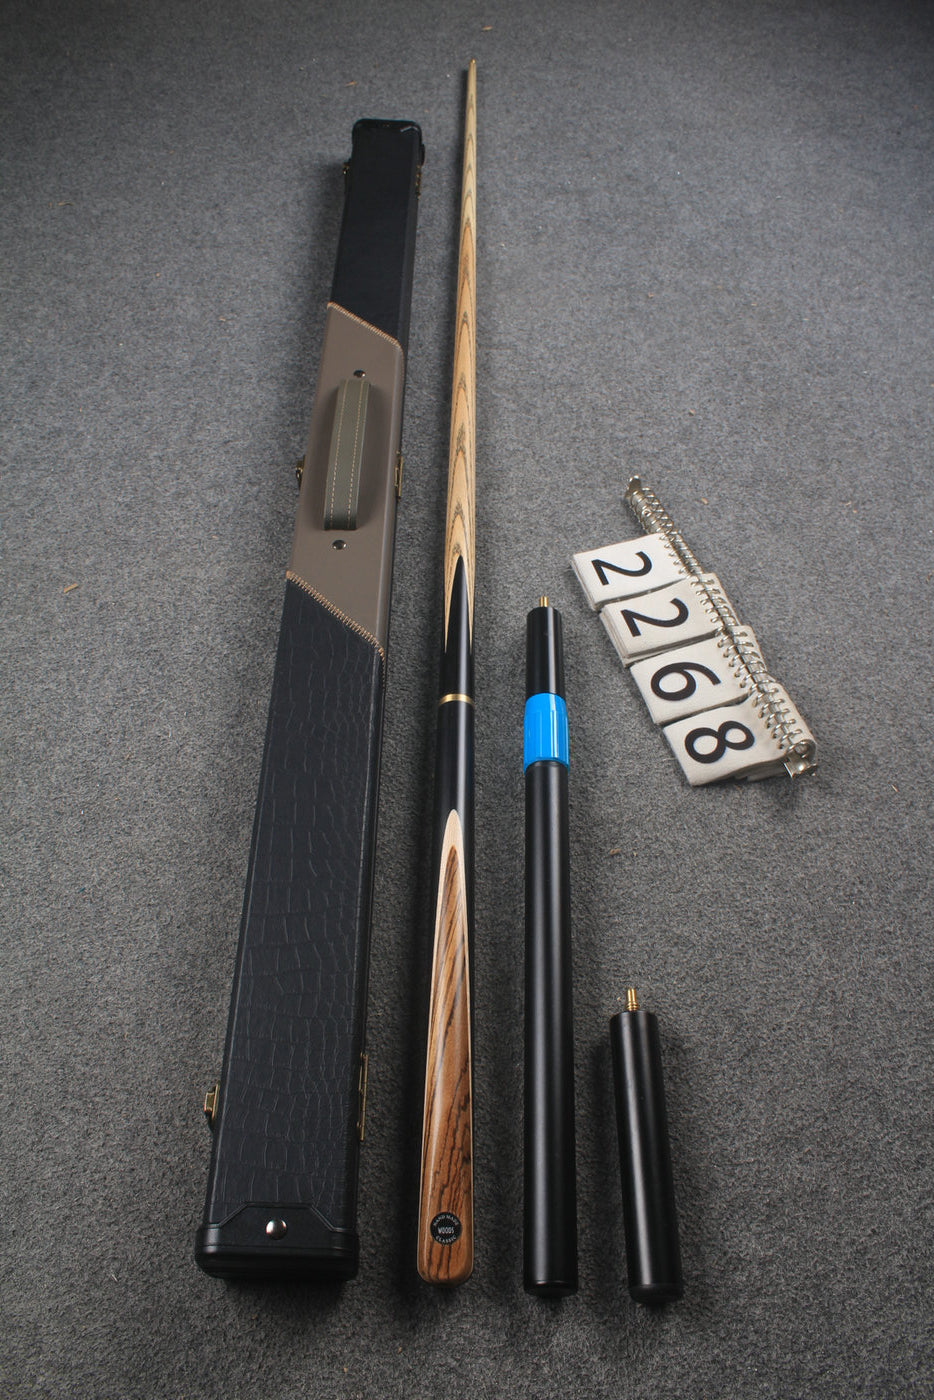 3/4 handmade ash snooker / pool cue # 2268